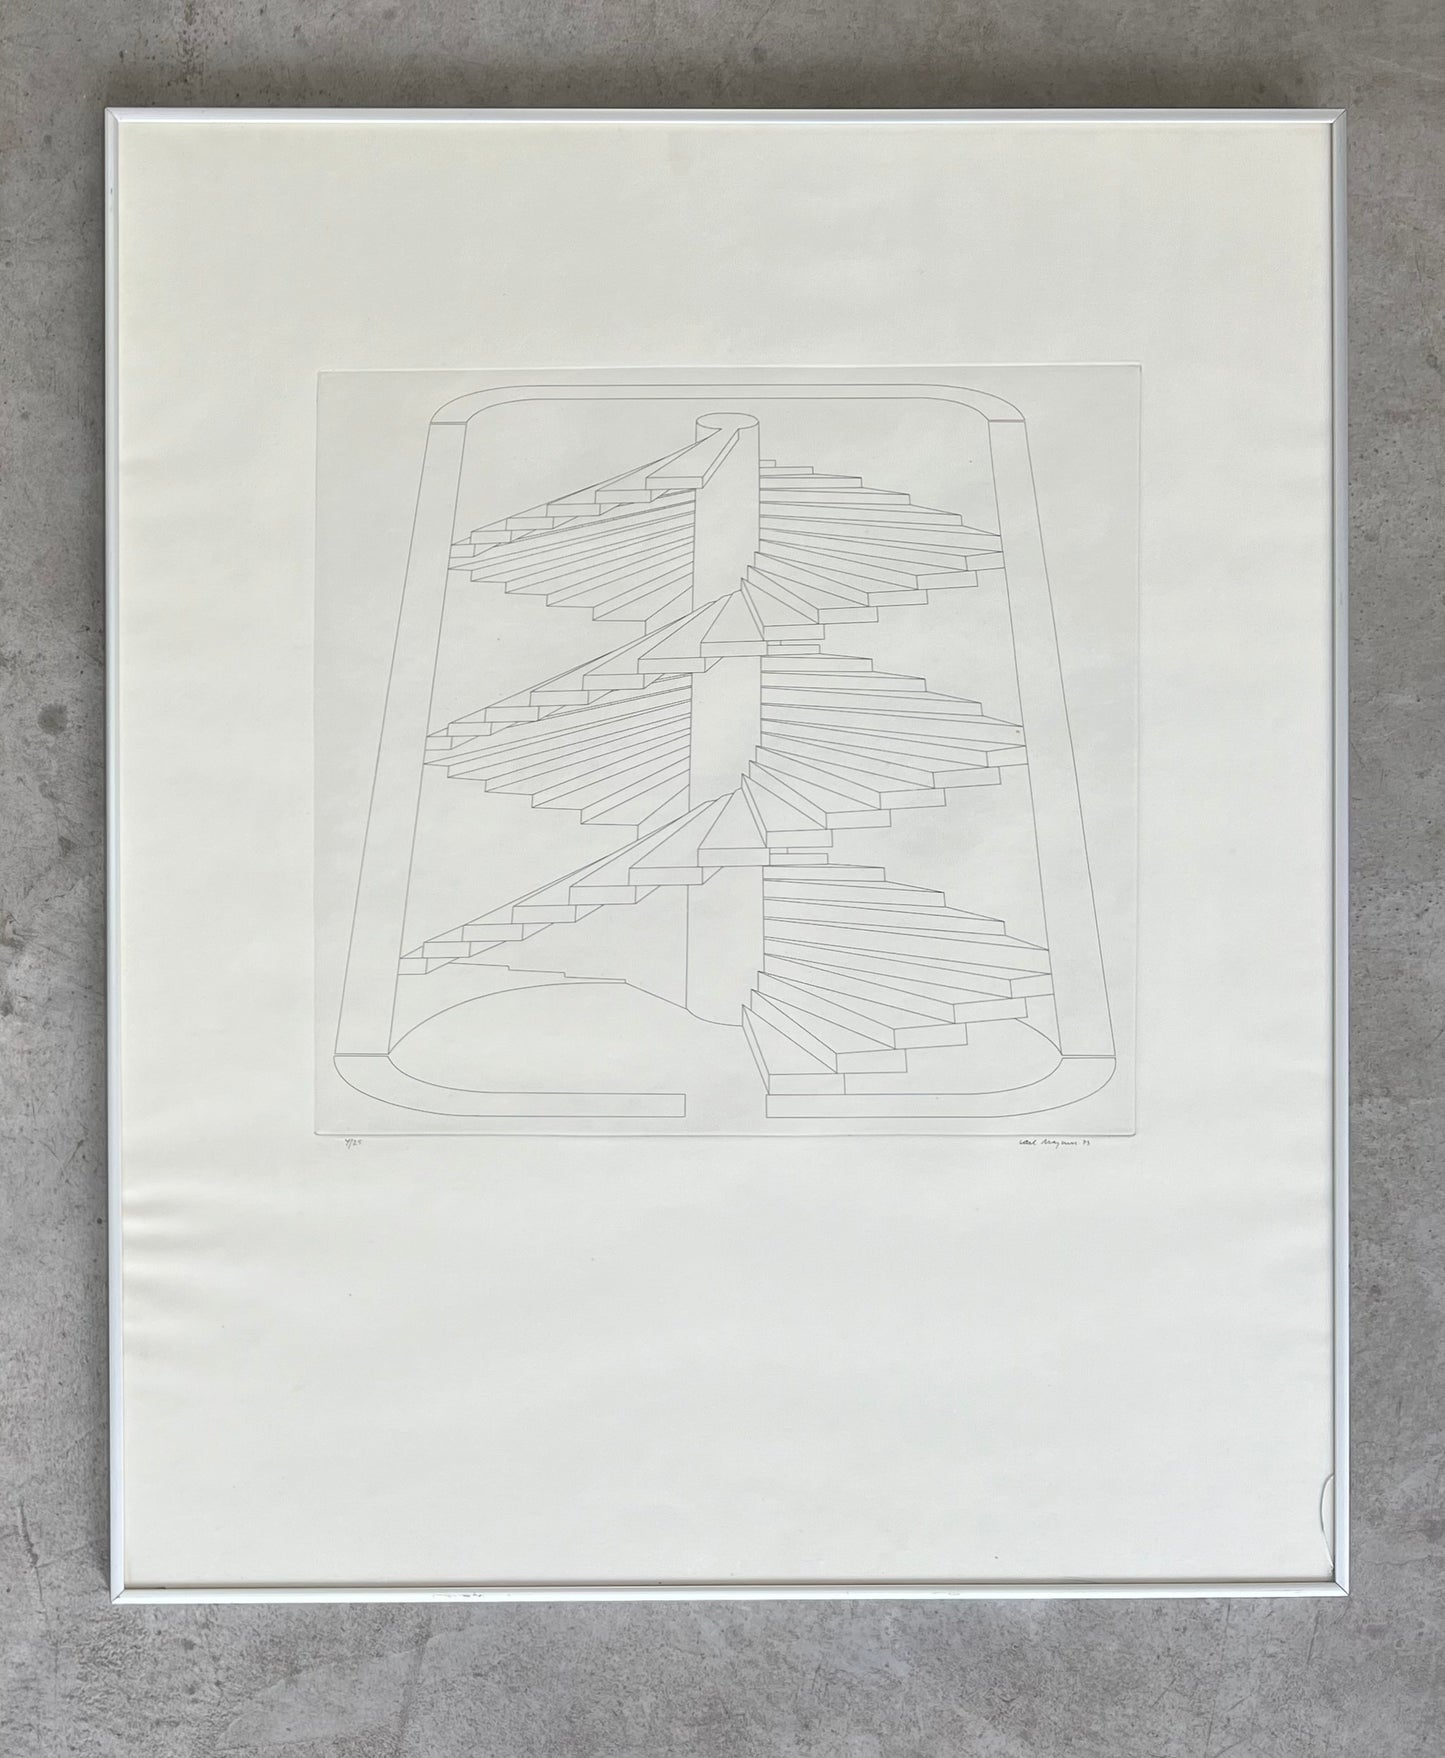 Carl Magnus. Composition, 1973